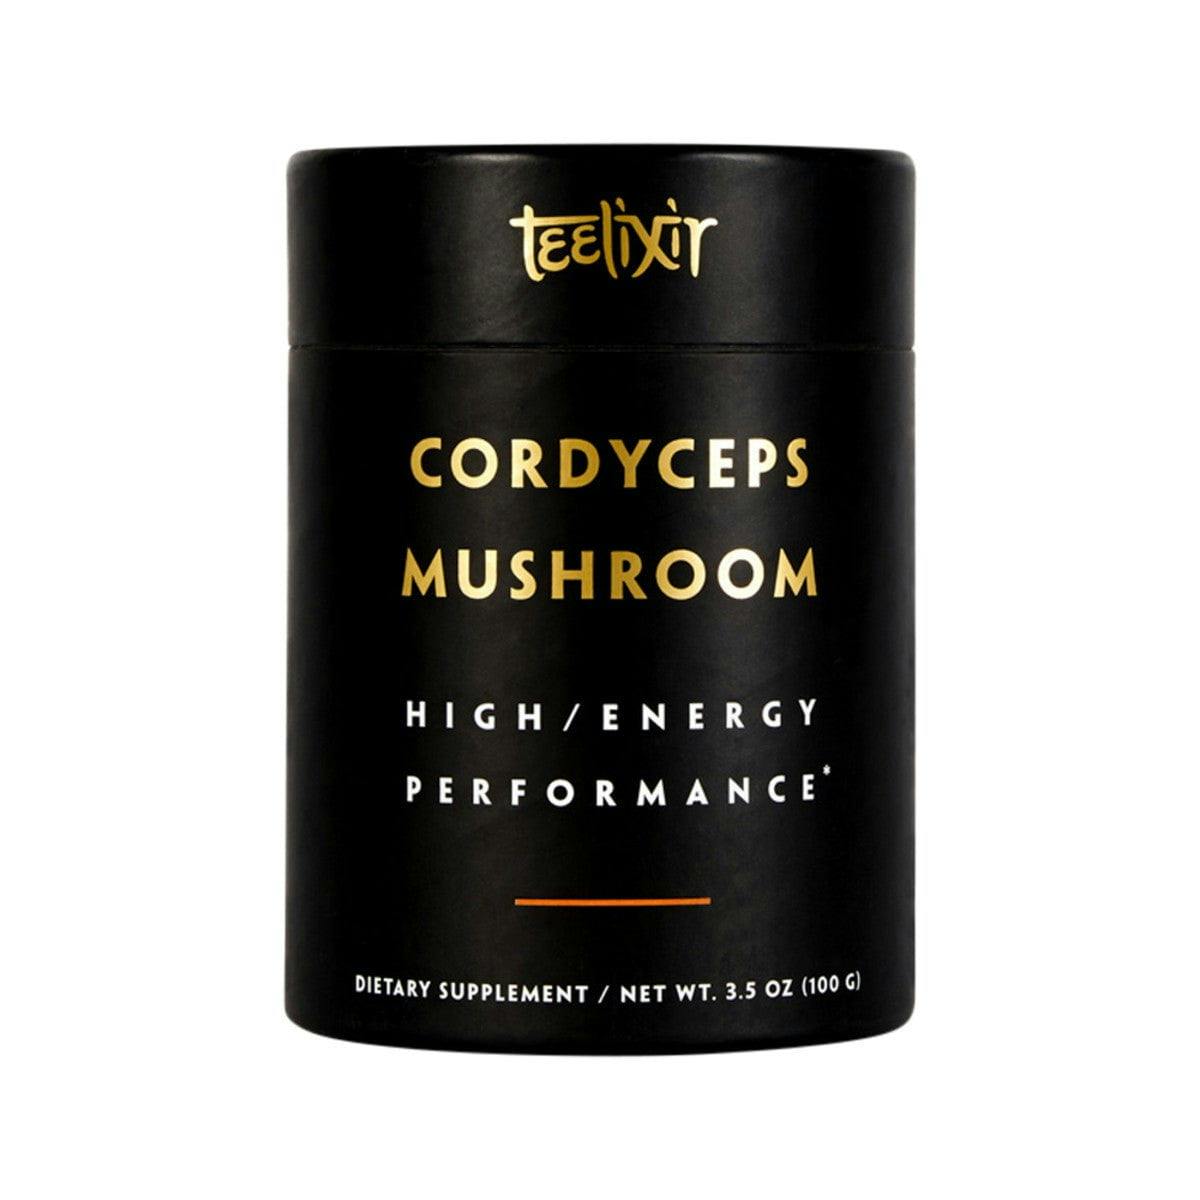 Teelixir Organic Cordyceps Mushroom (High/Energy Performance) 100g